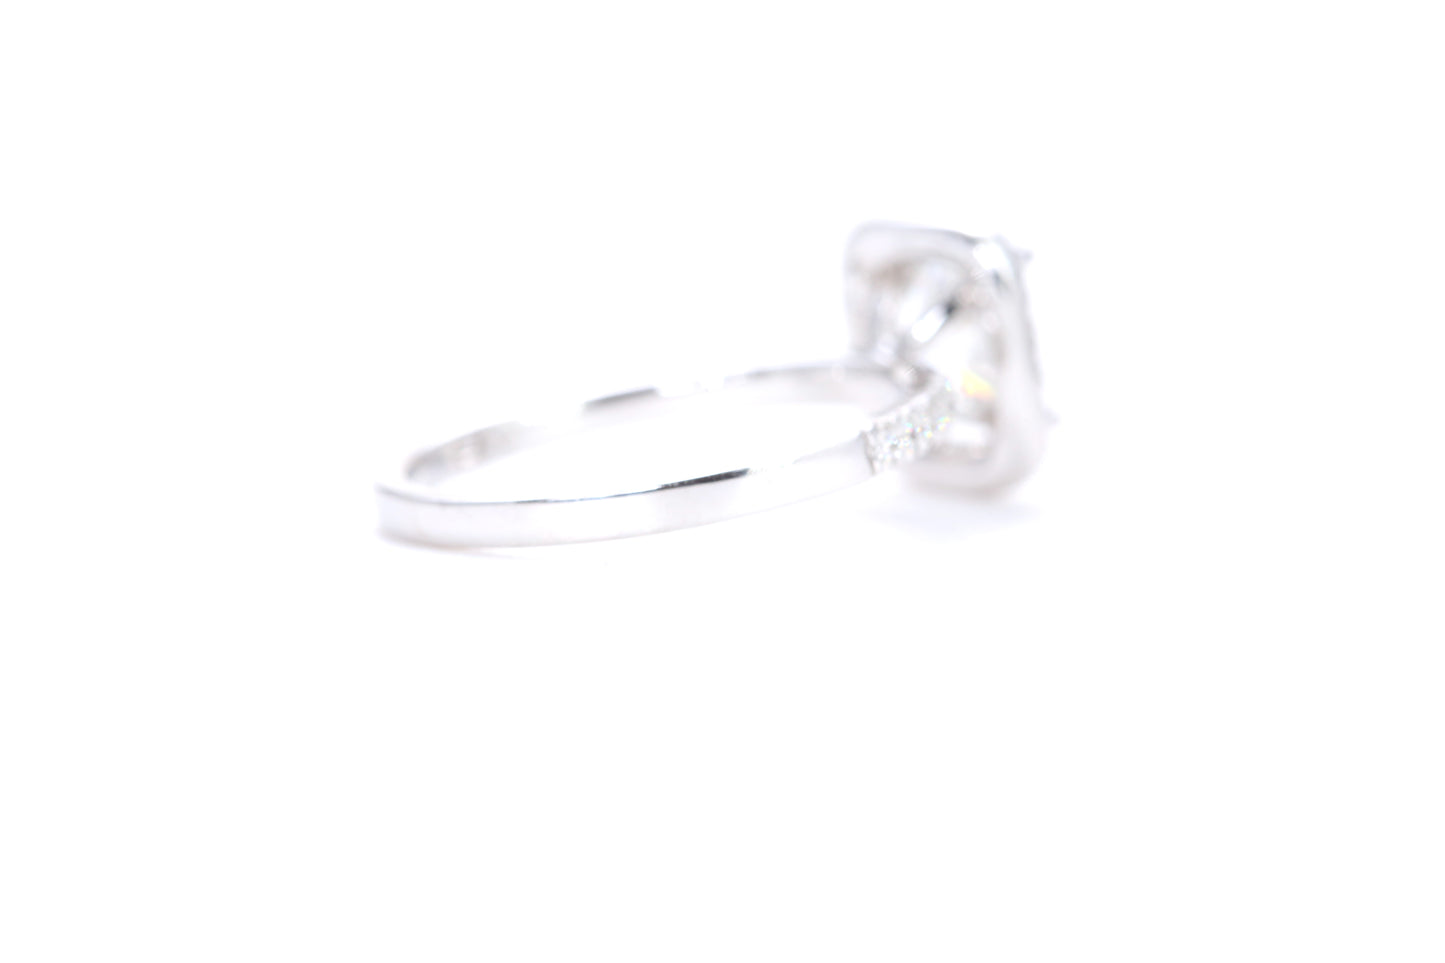 Cushion Halo Diamond Ring